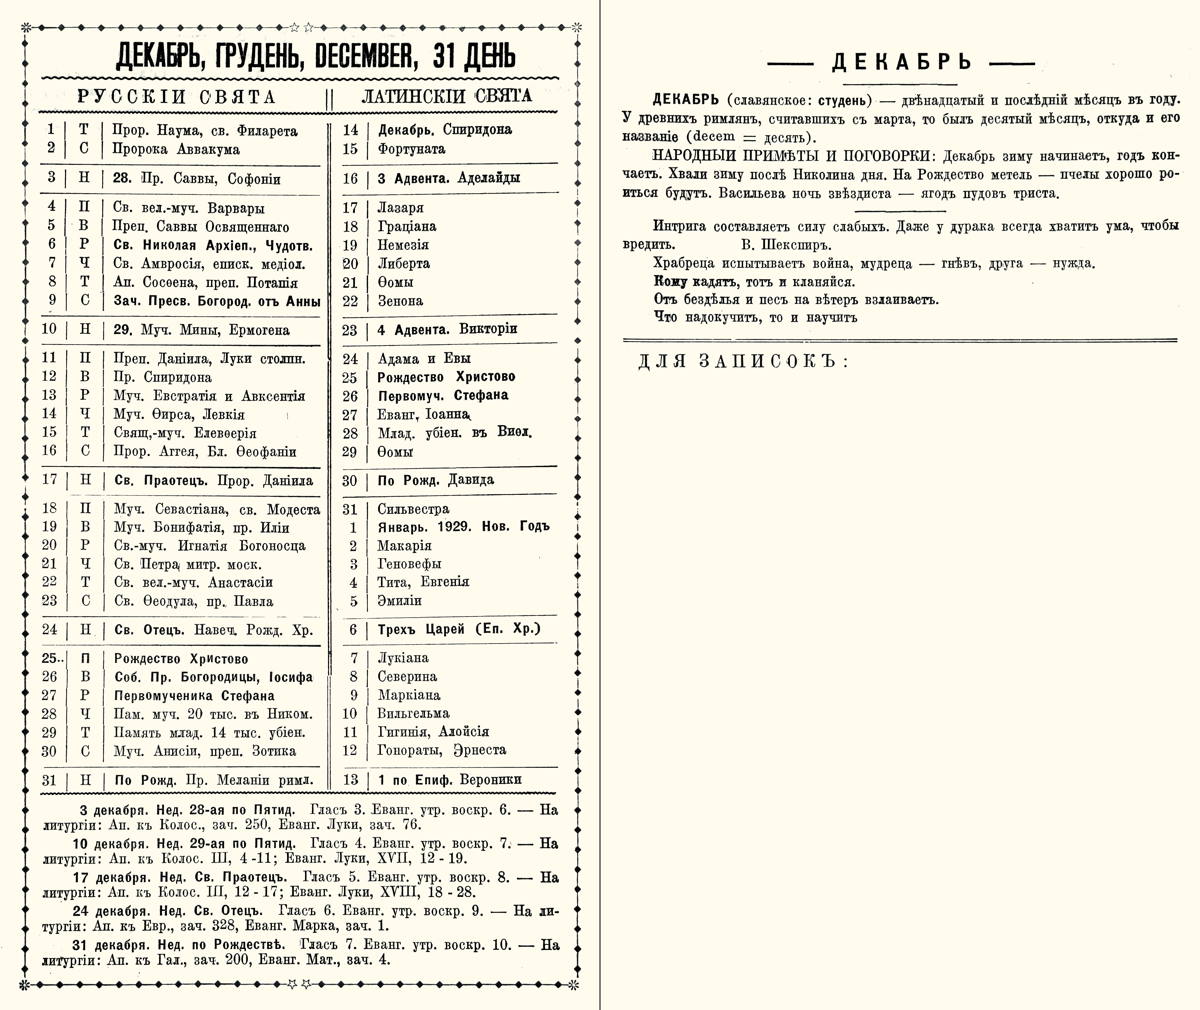 Orthodox Church Calendar, December 1928